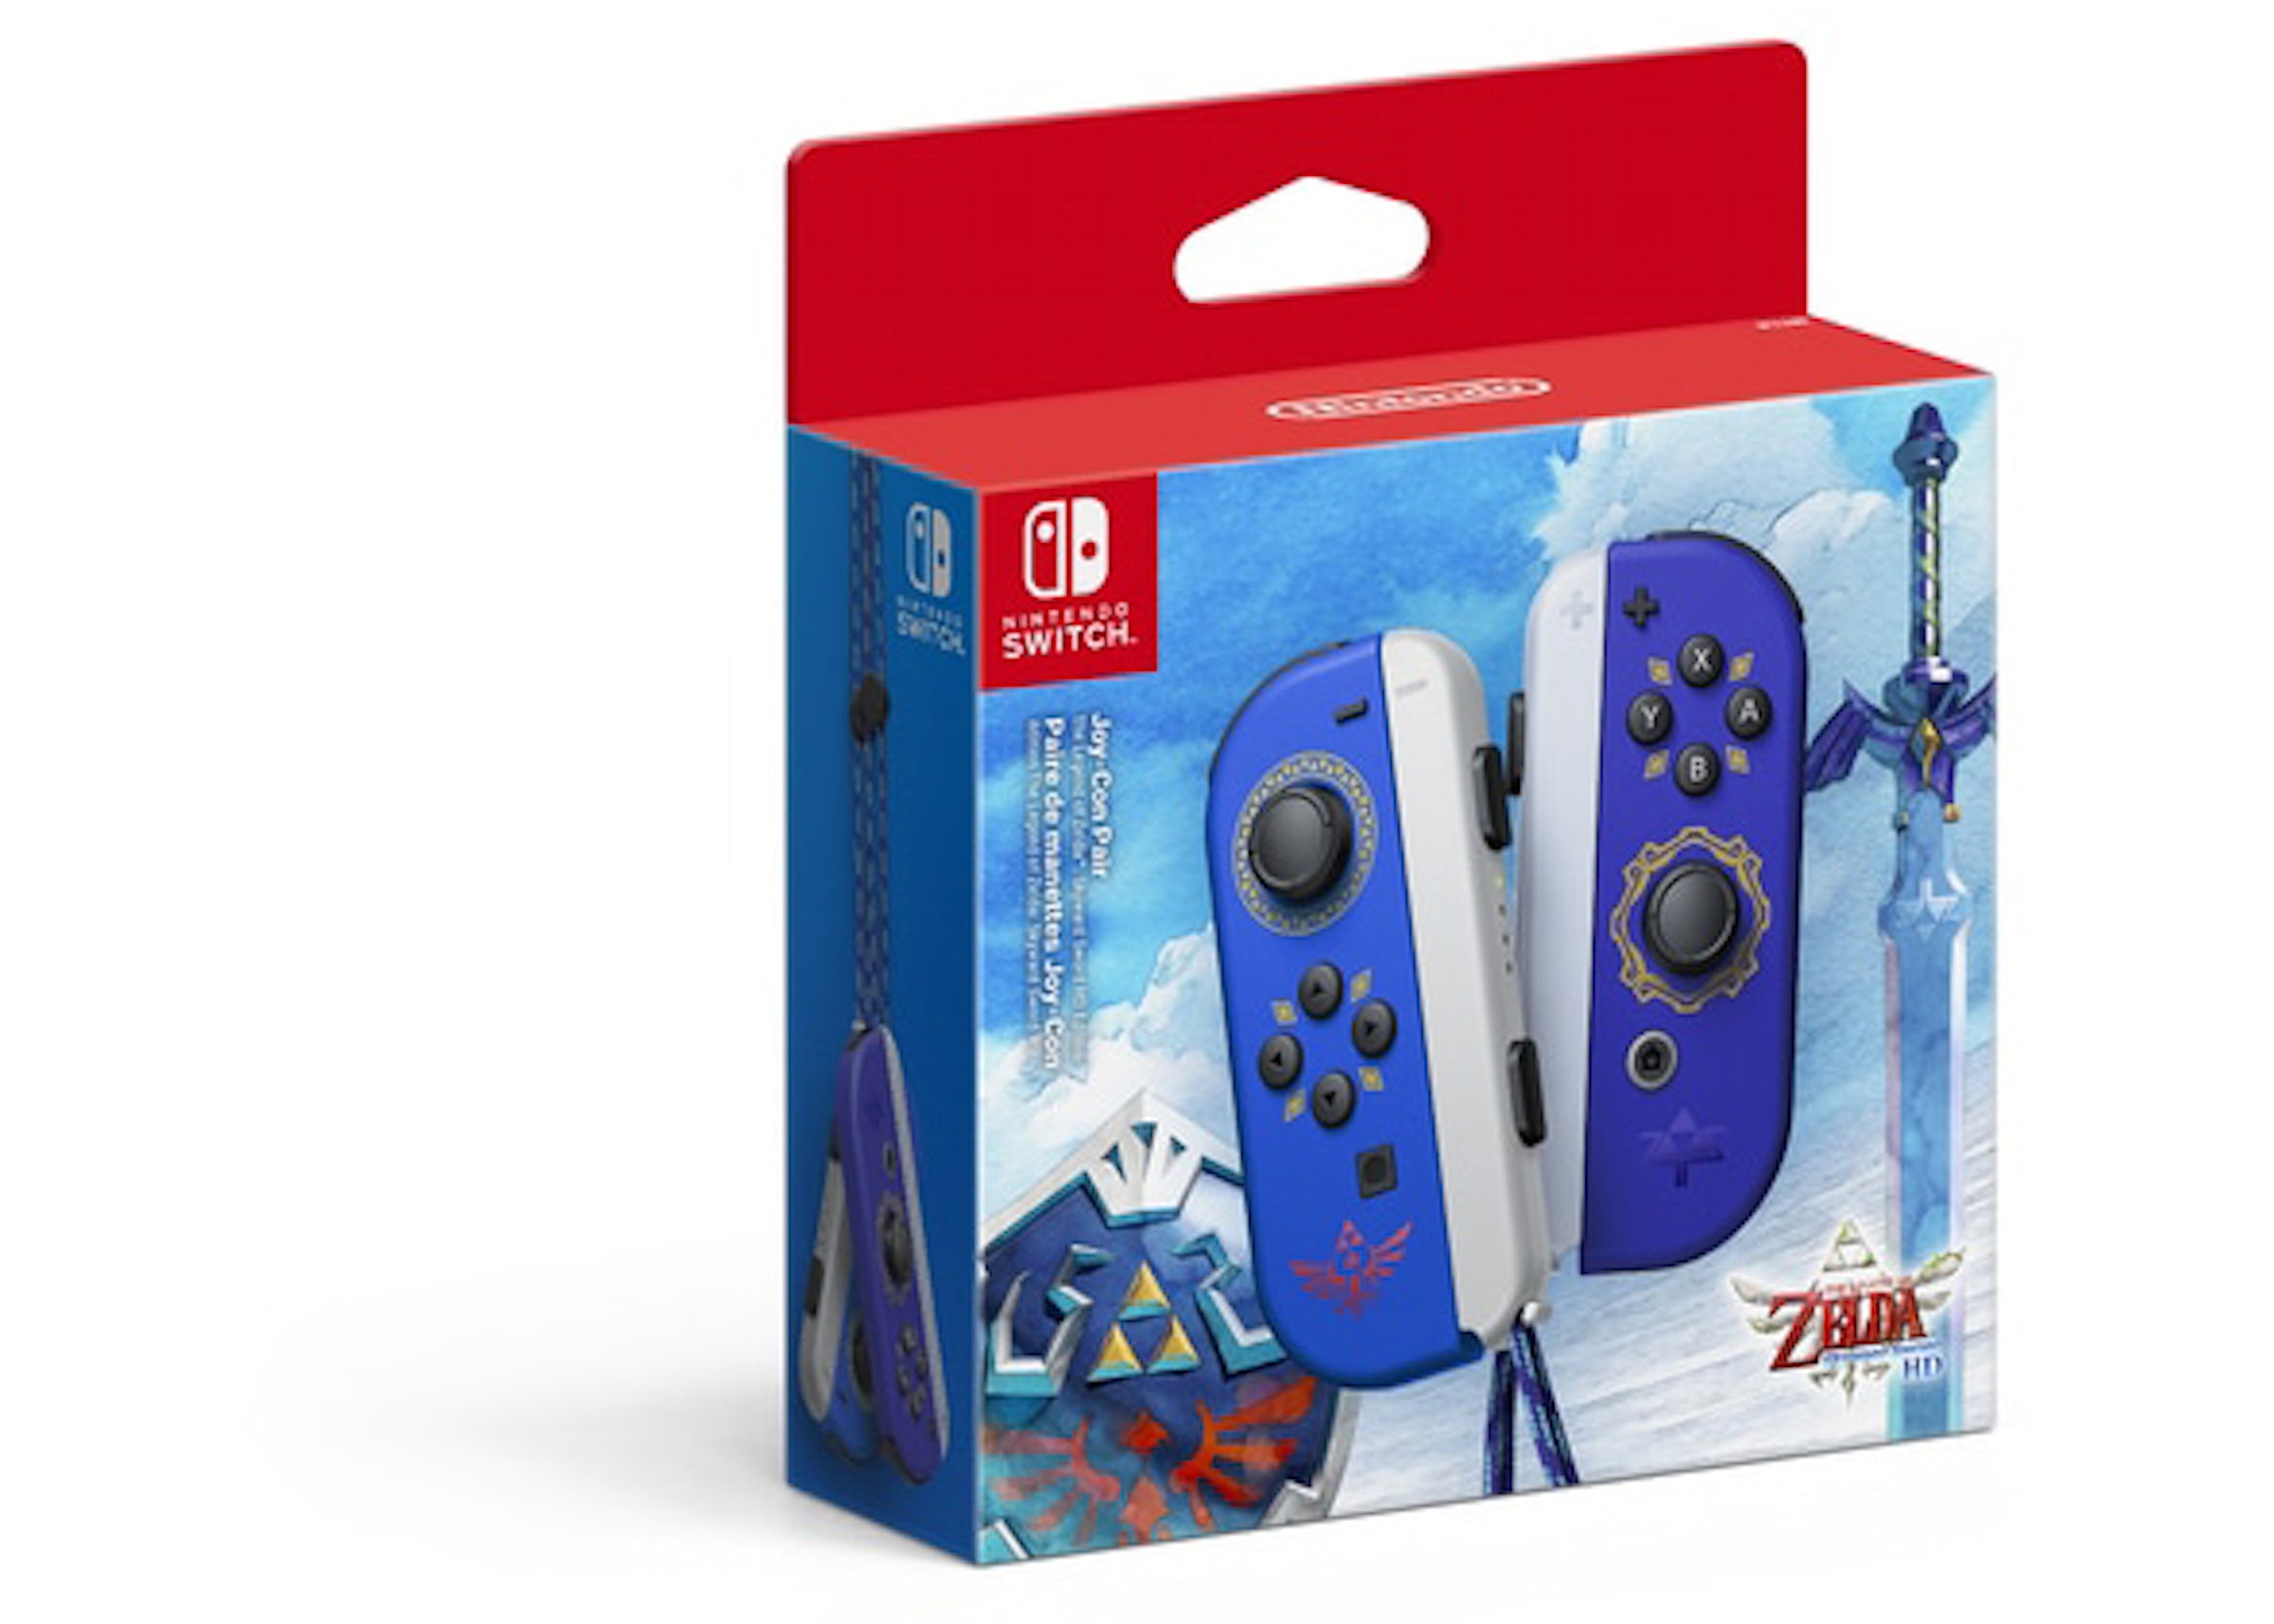 Nintendo Switch OLED Neon Red Blue, The Legend of Zelda: Skyward